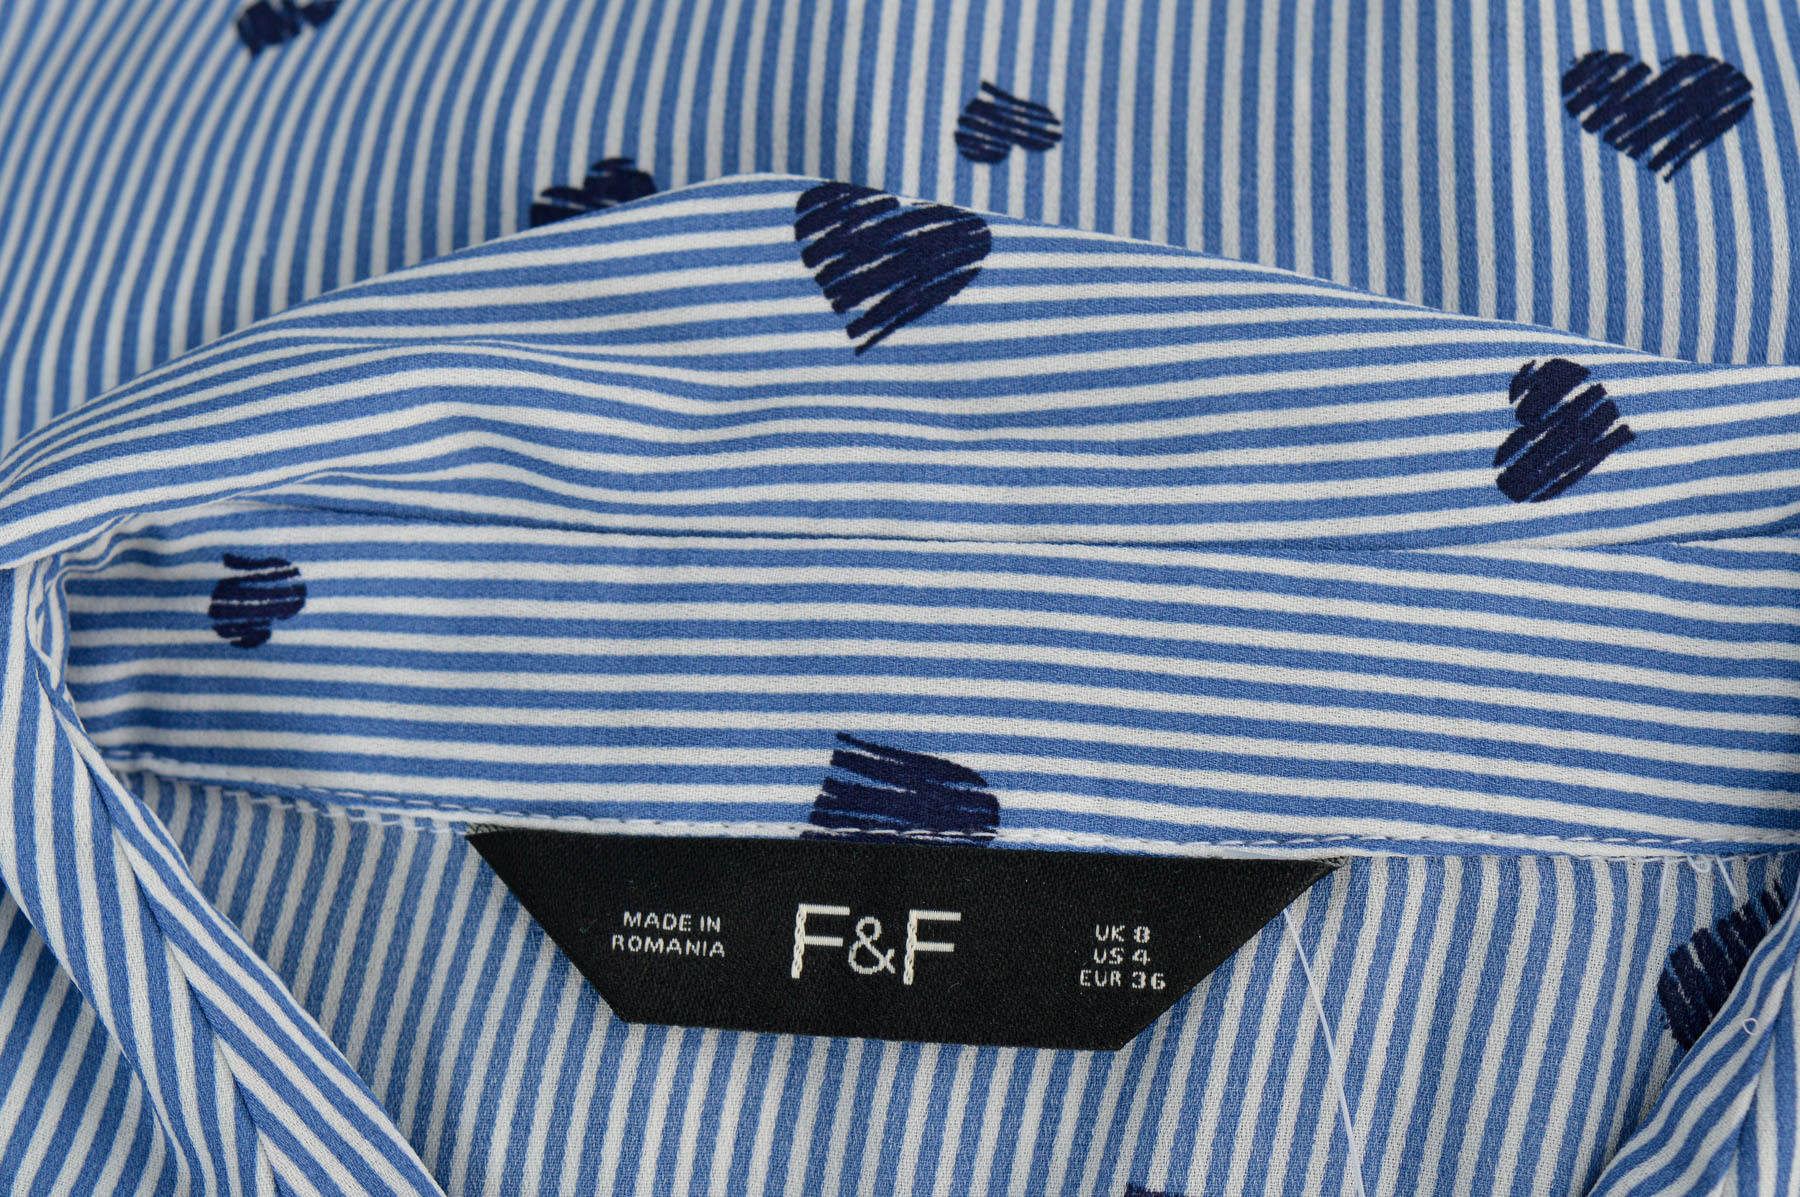 Women's shirt - F&F - 2